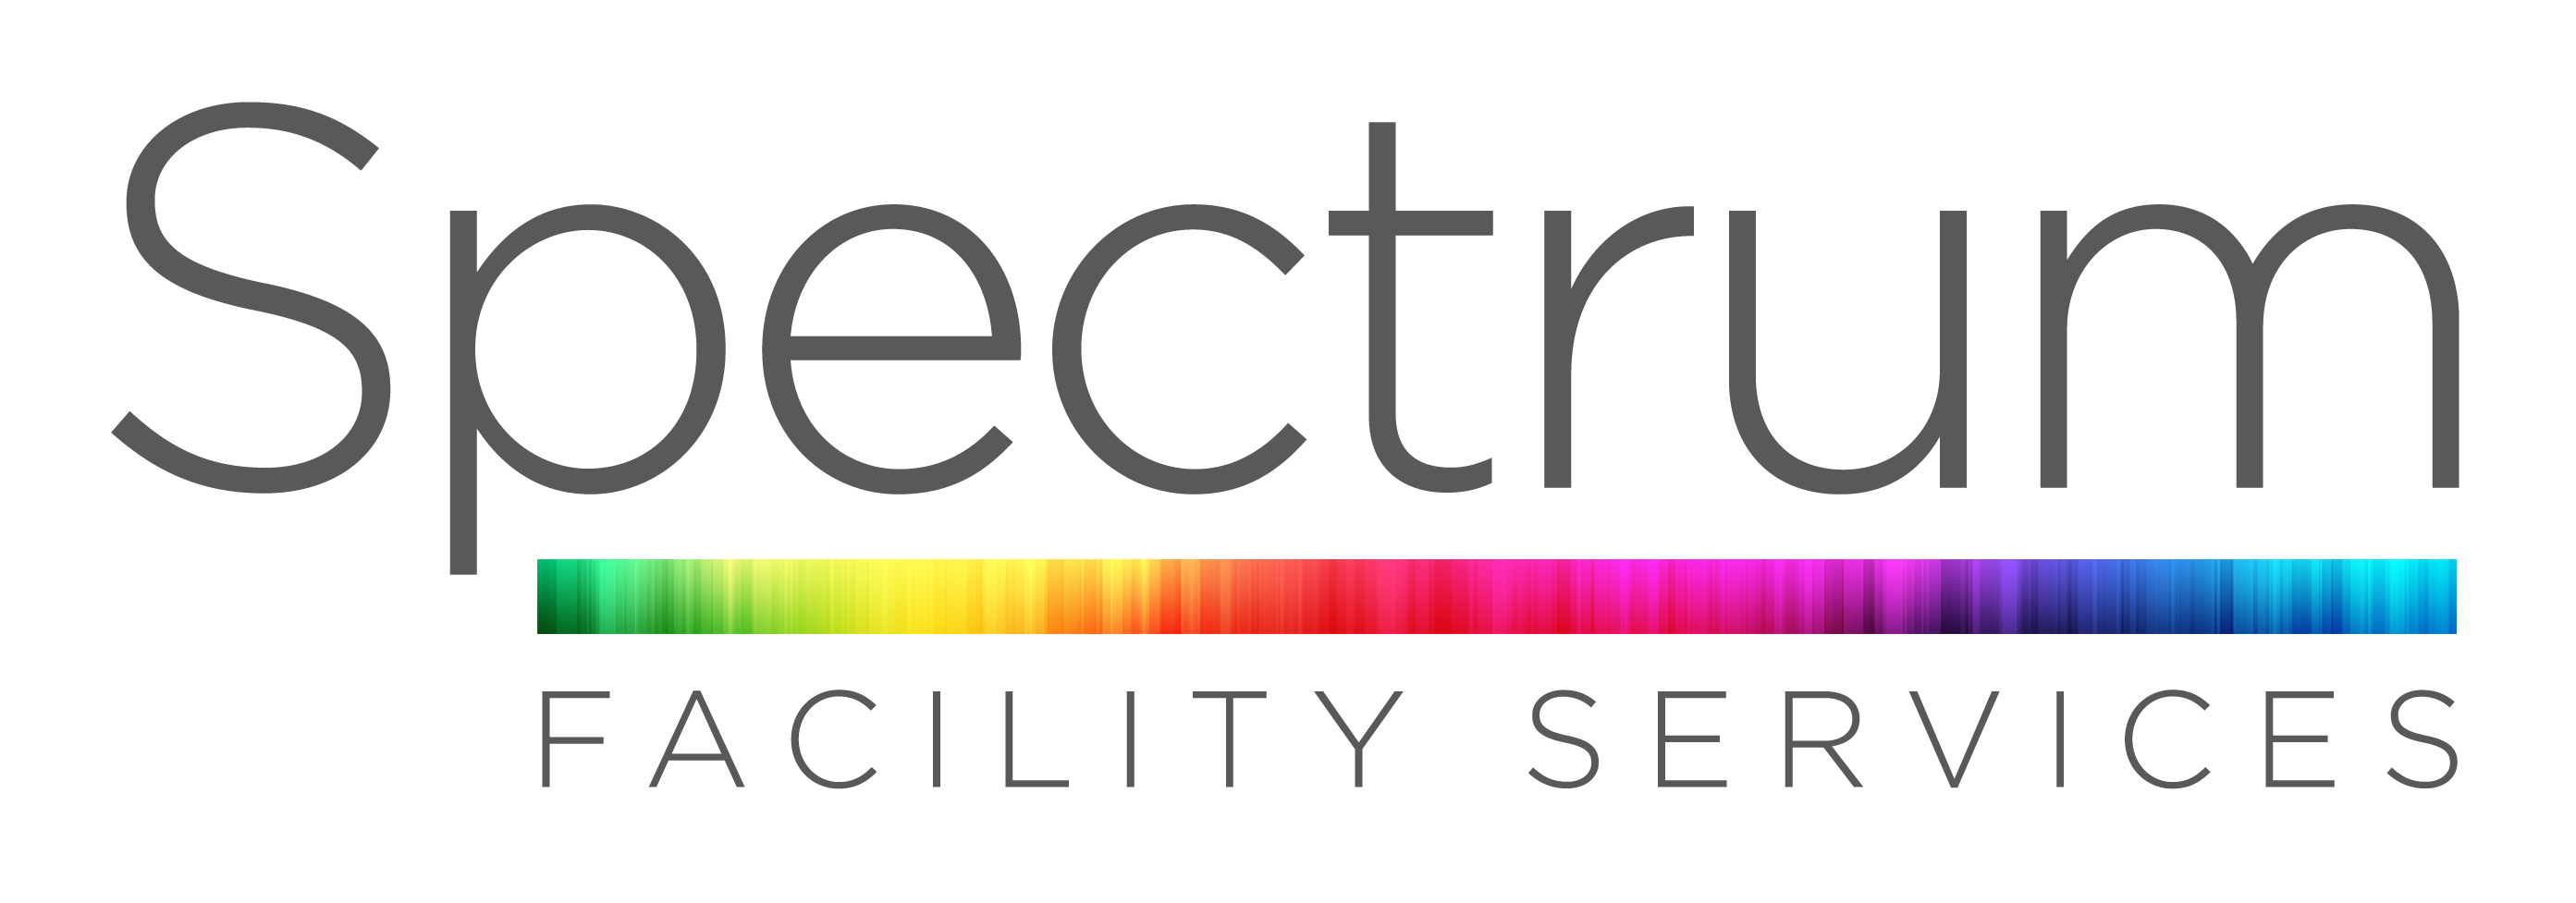 Spectrum Facility Services